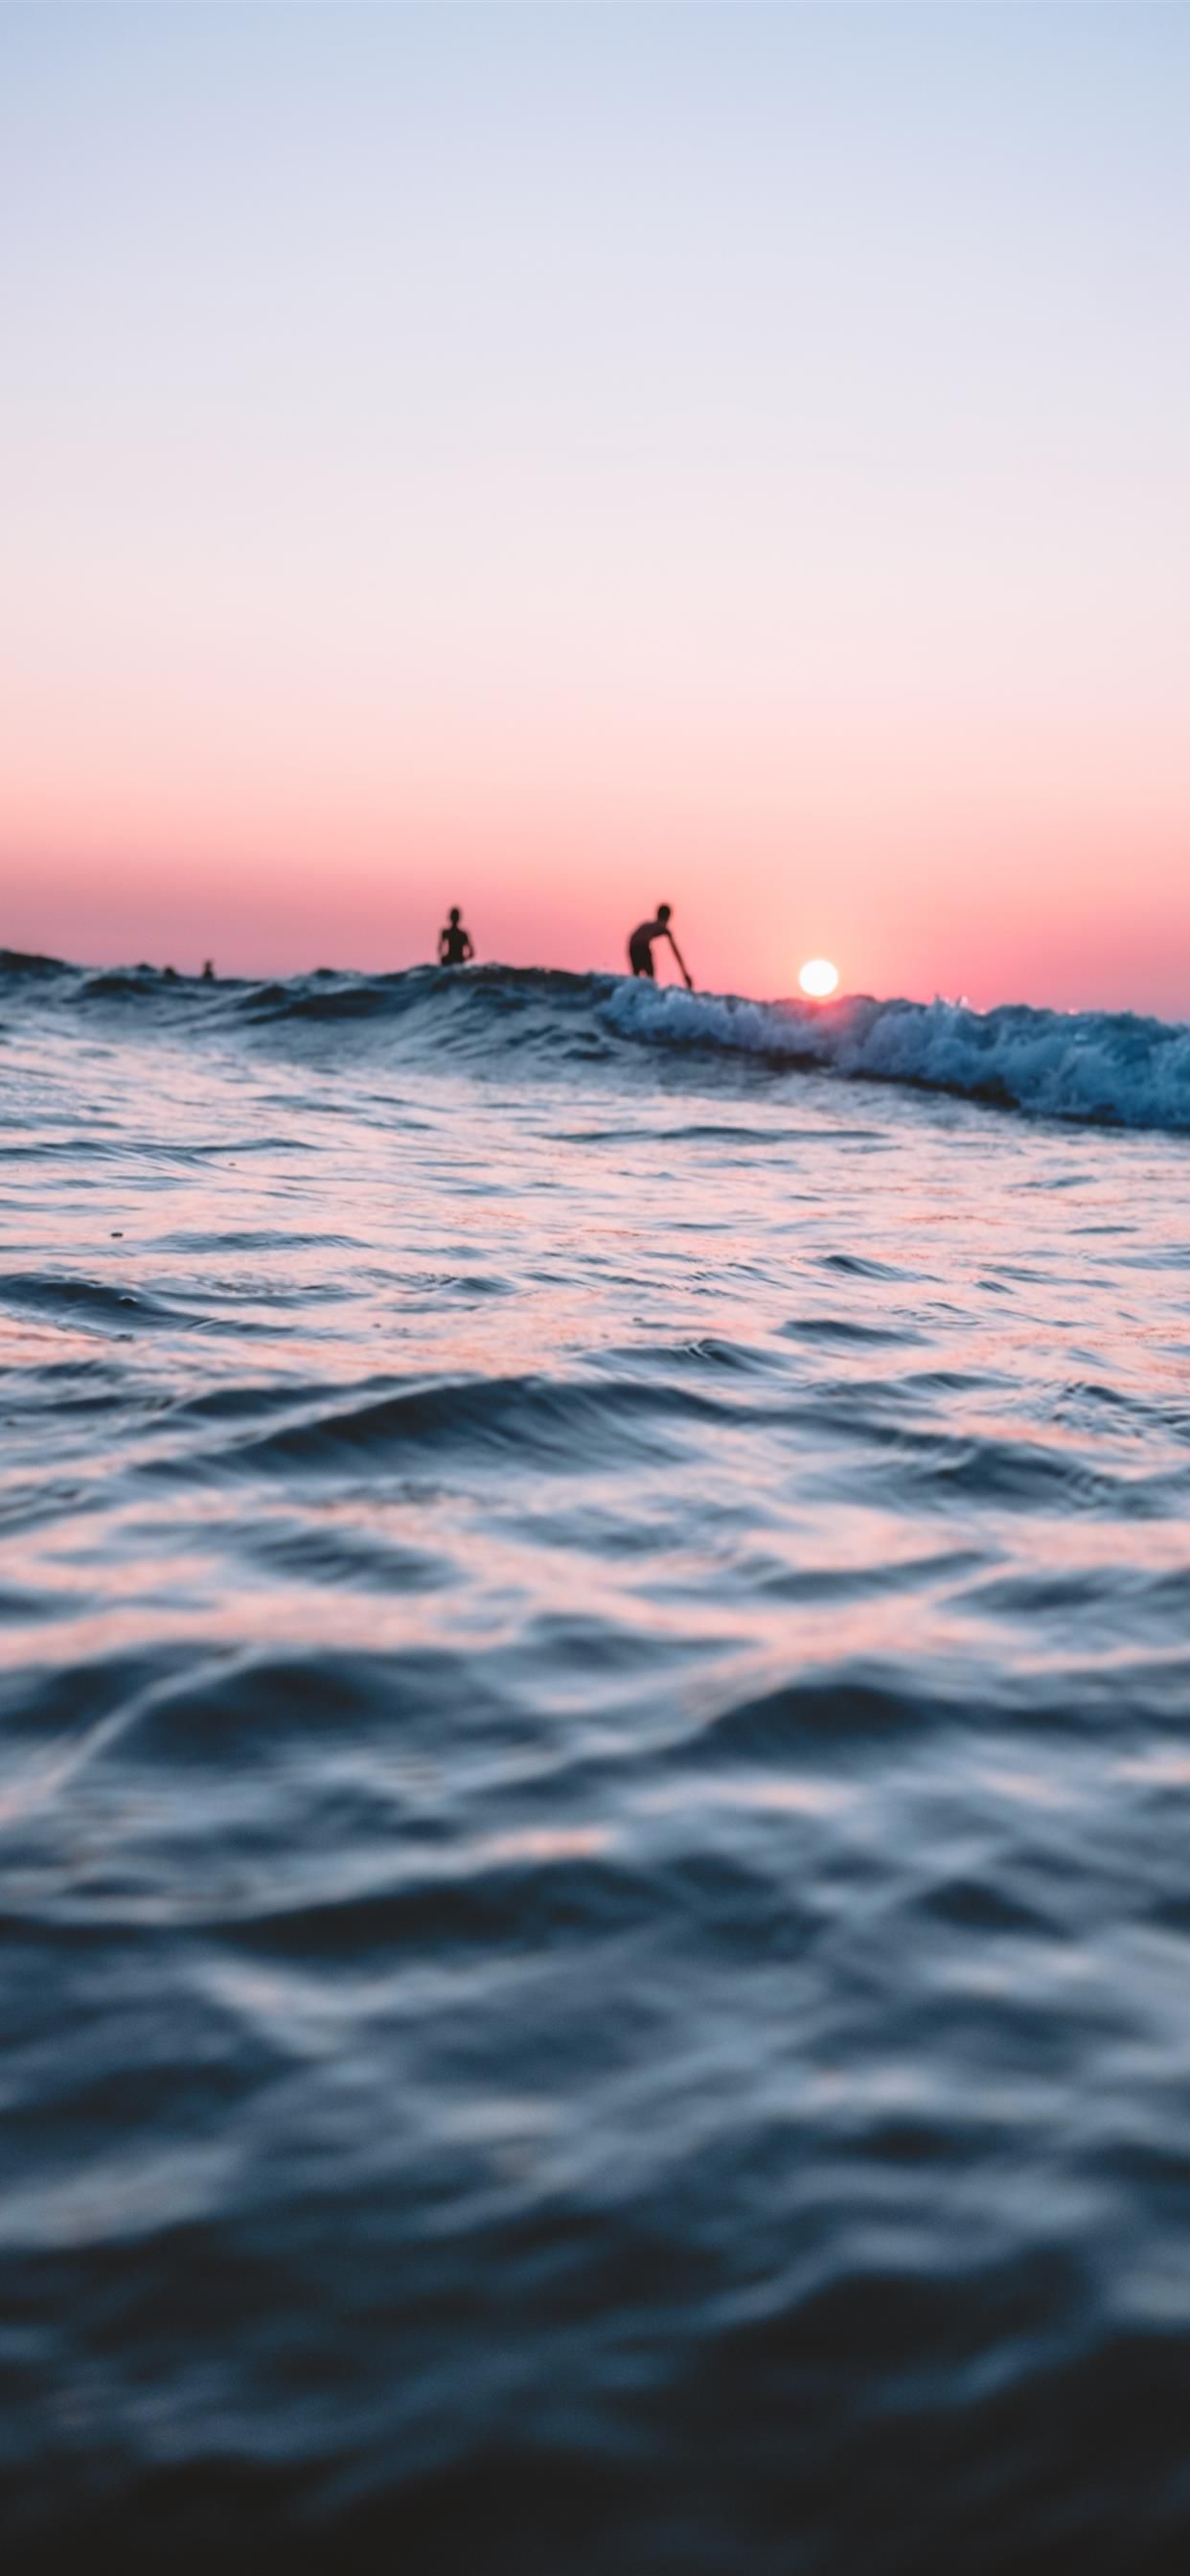 Calming Beach Waves iPhone X Wallpaper Free Download